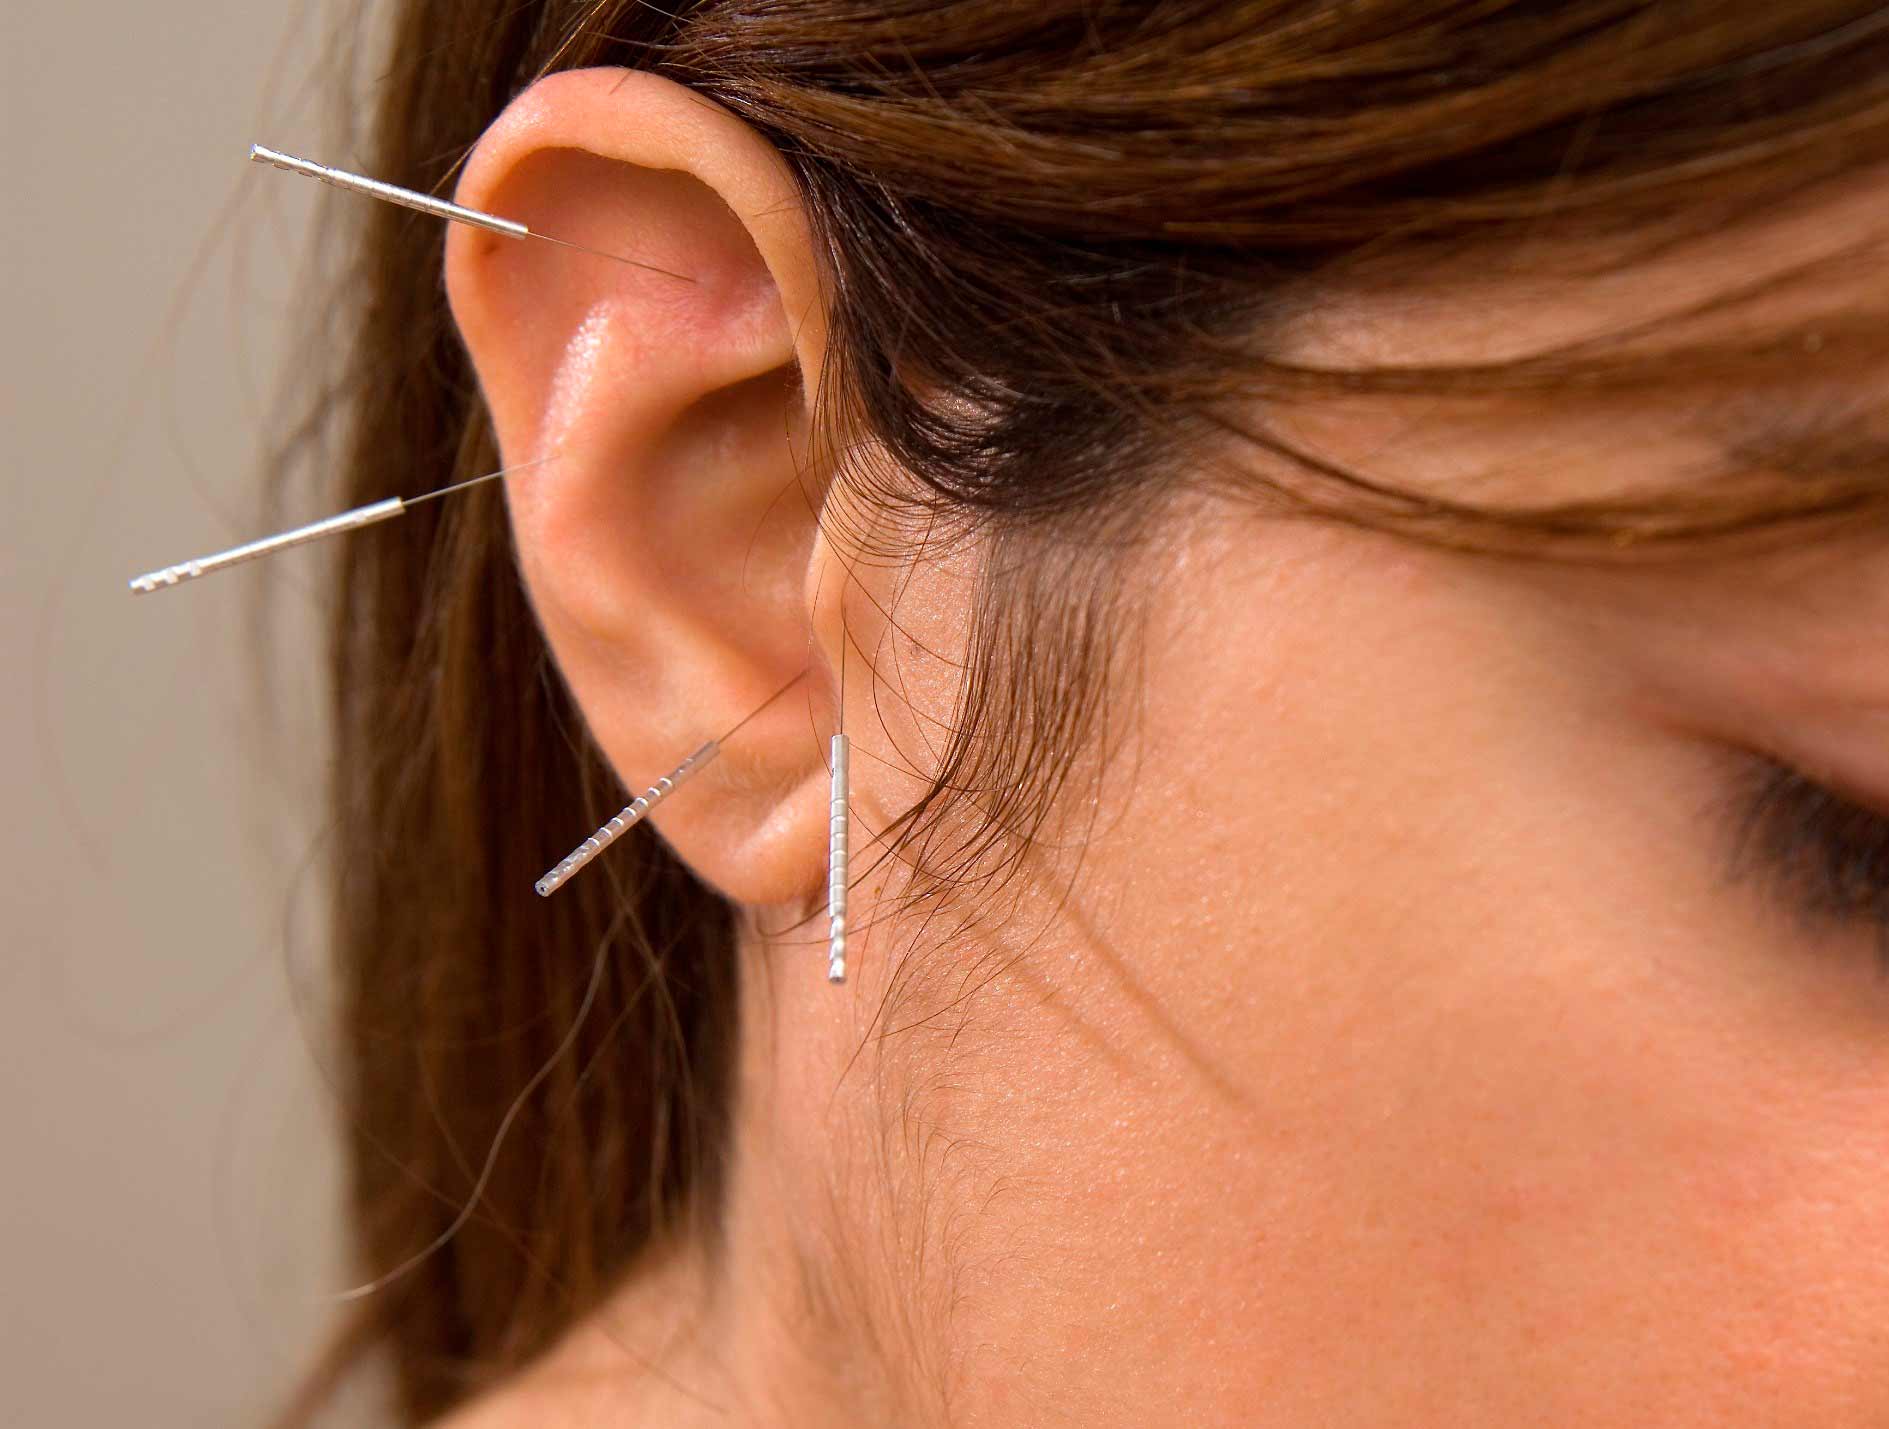 oor acupunctuur